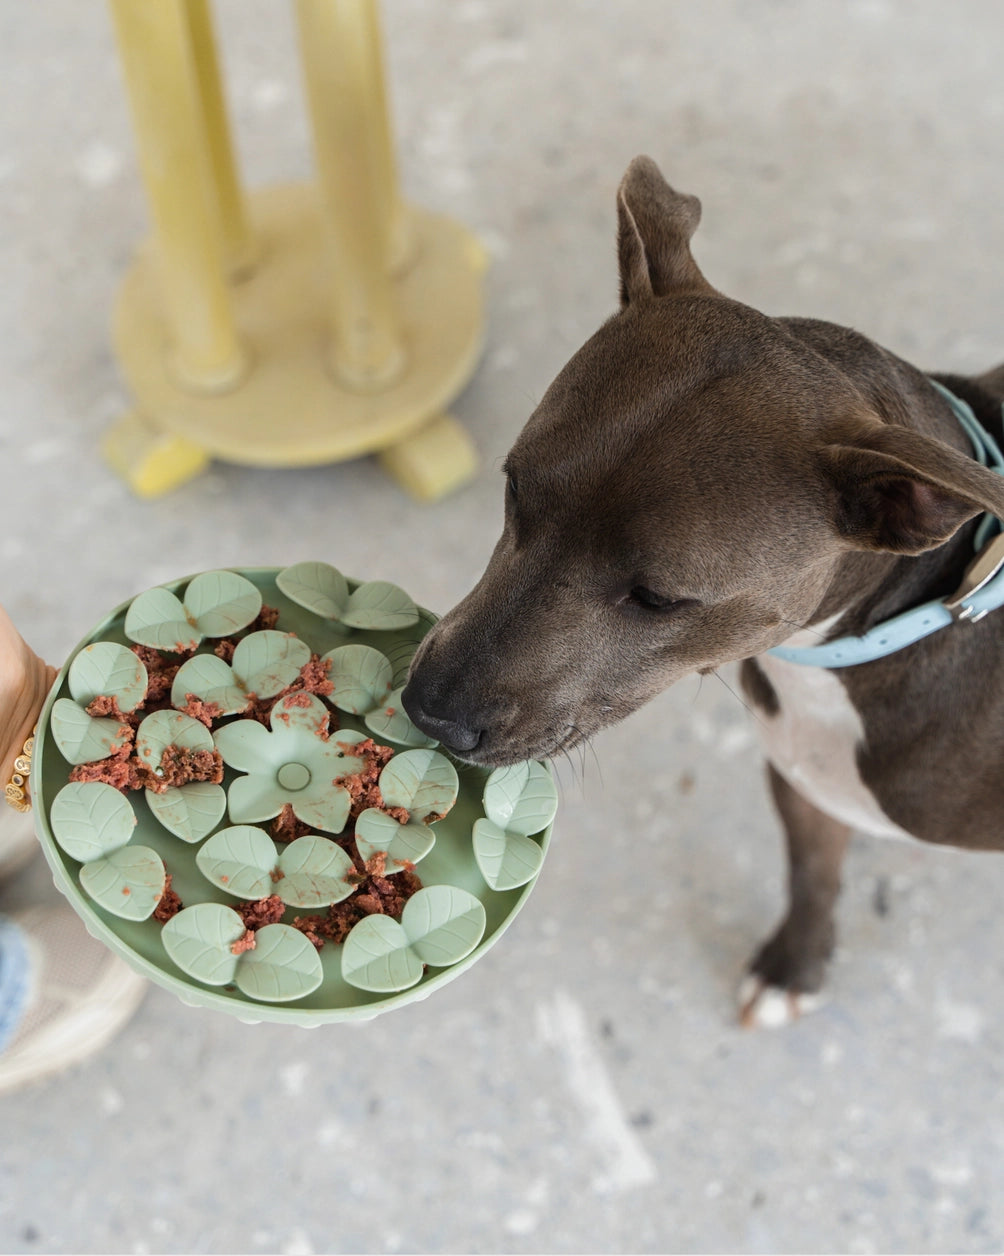 Dog Silicone Snuffle Feeding Mat – Kuma Pets